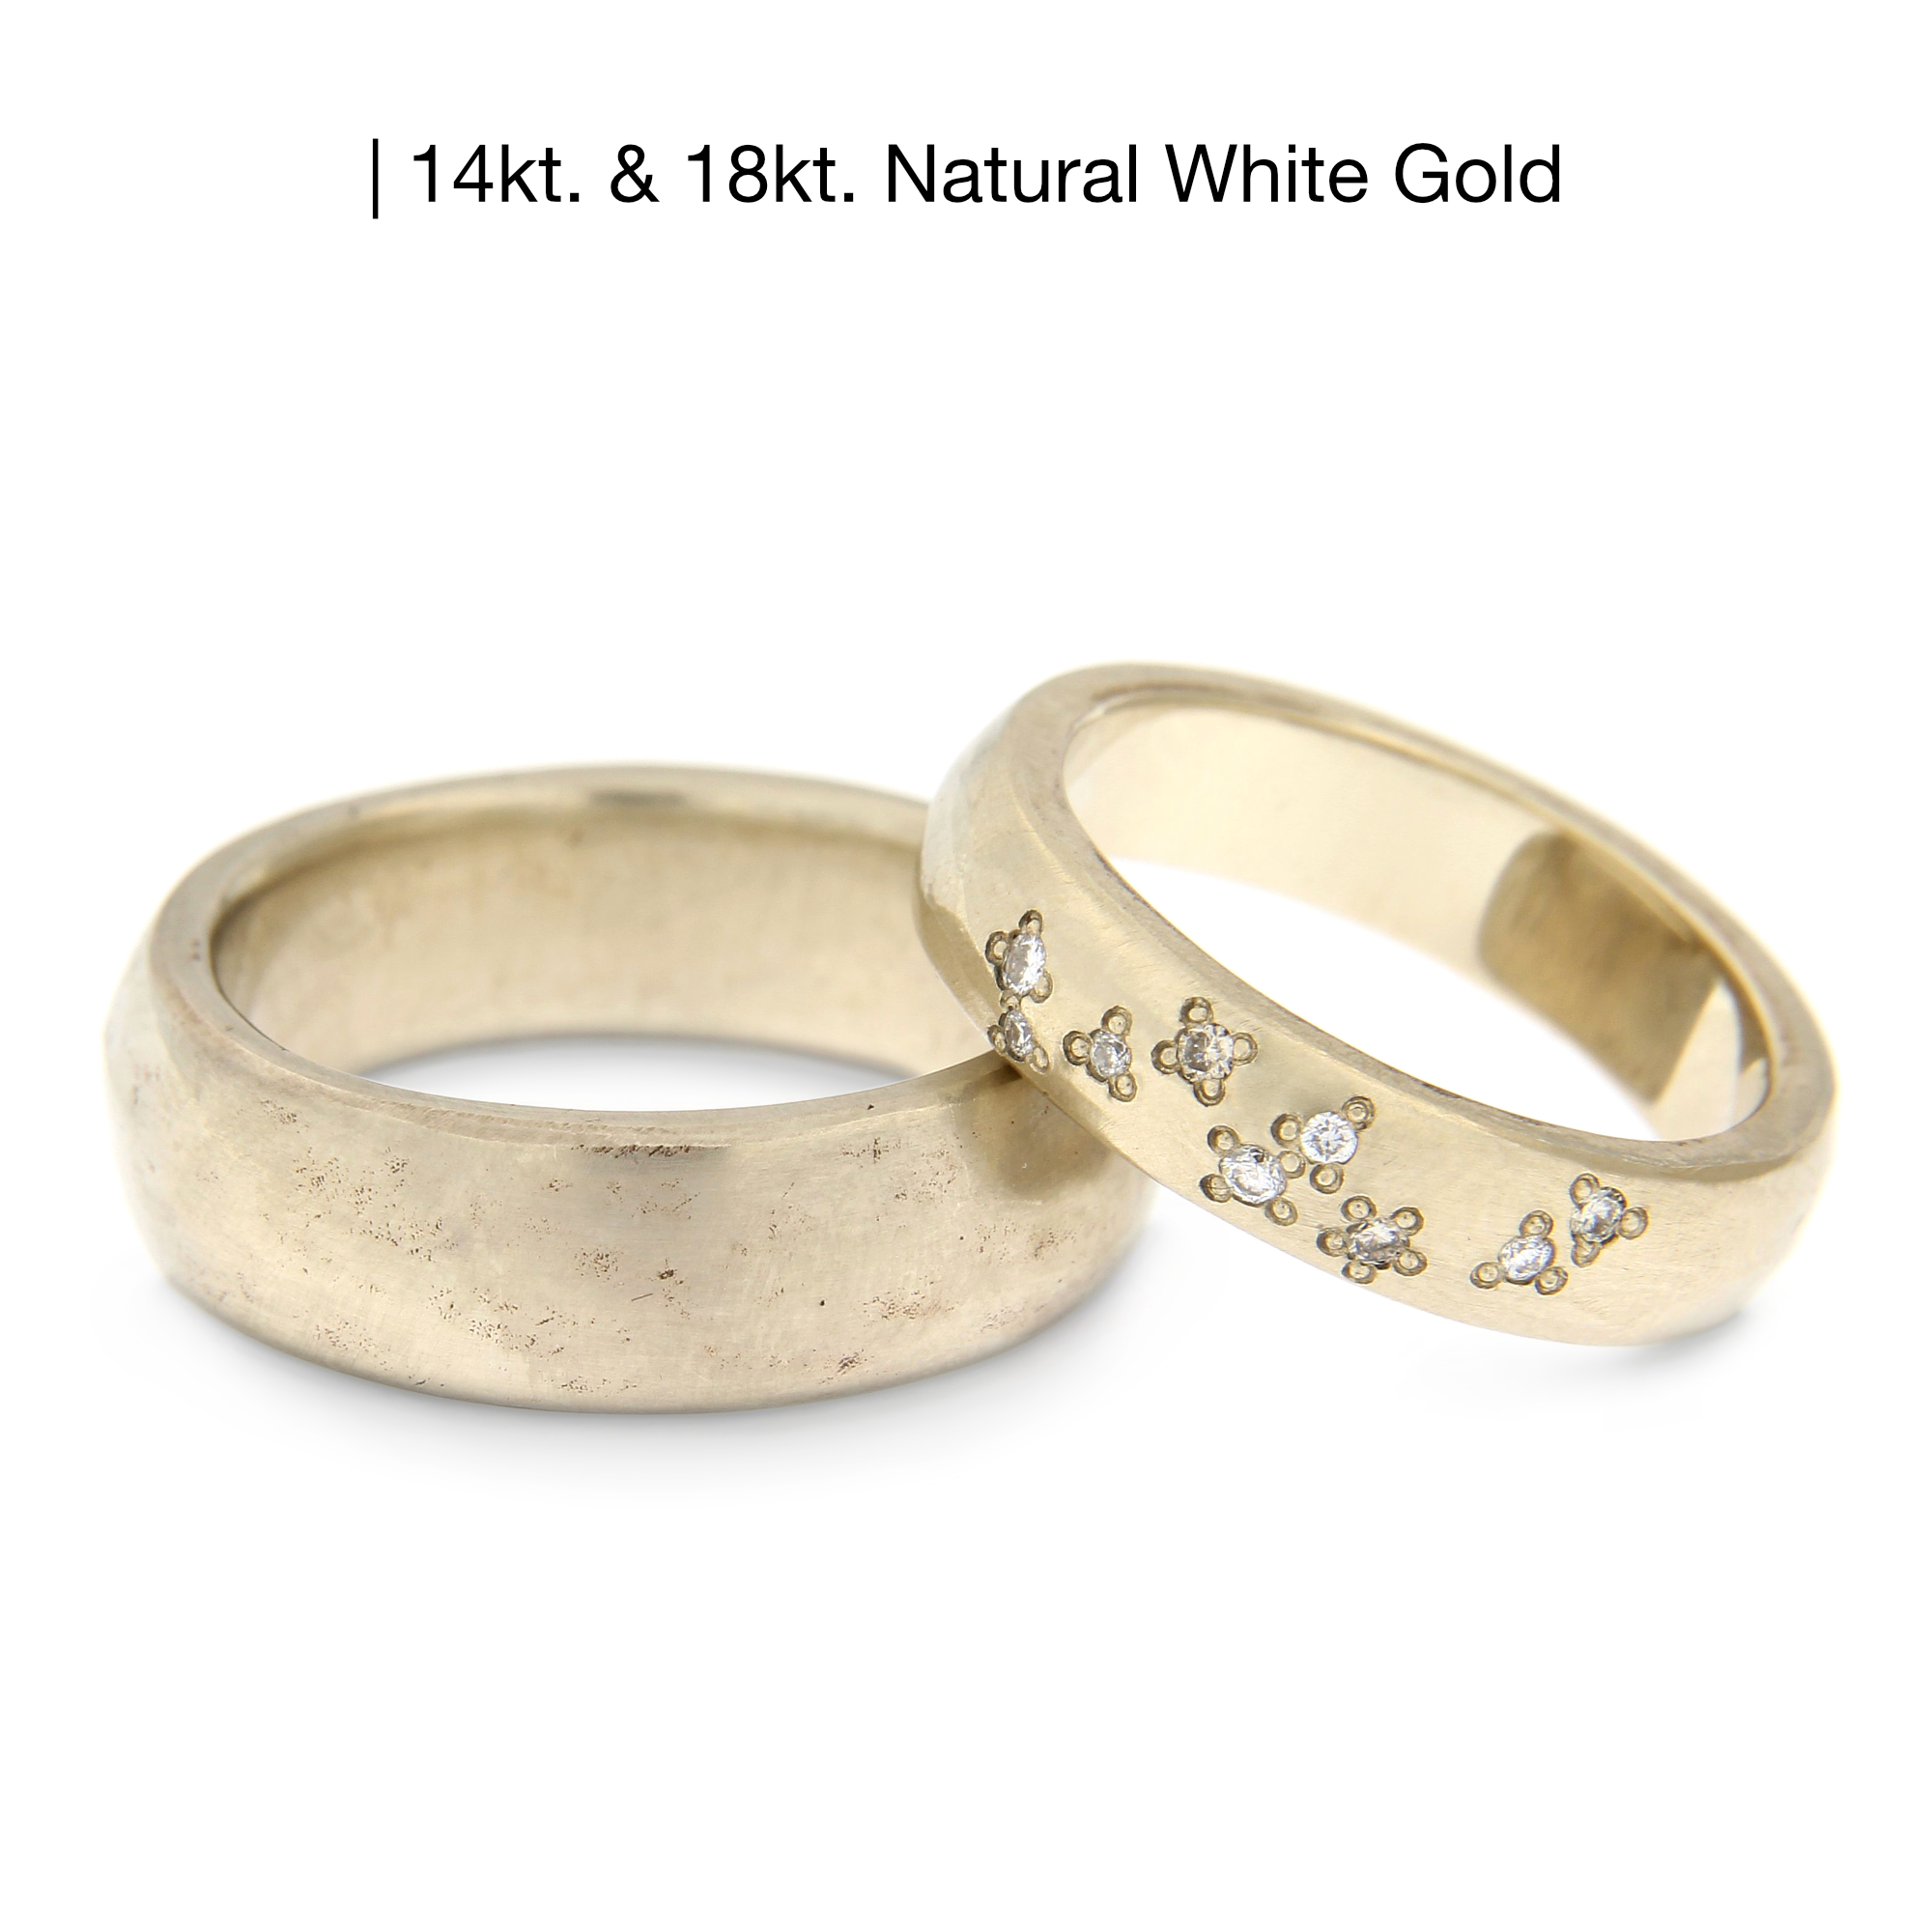 14 kt natural white gold, diamonds, Katie G.  Jewellery